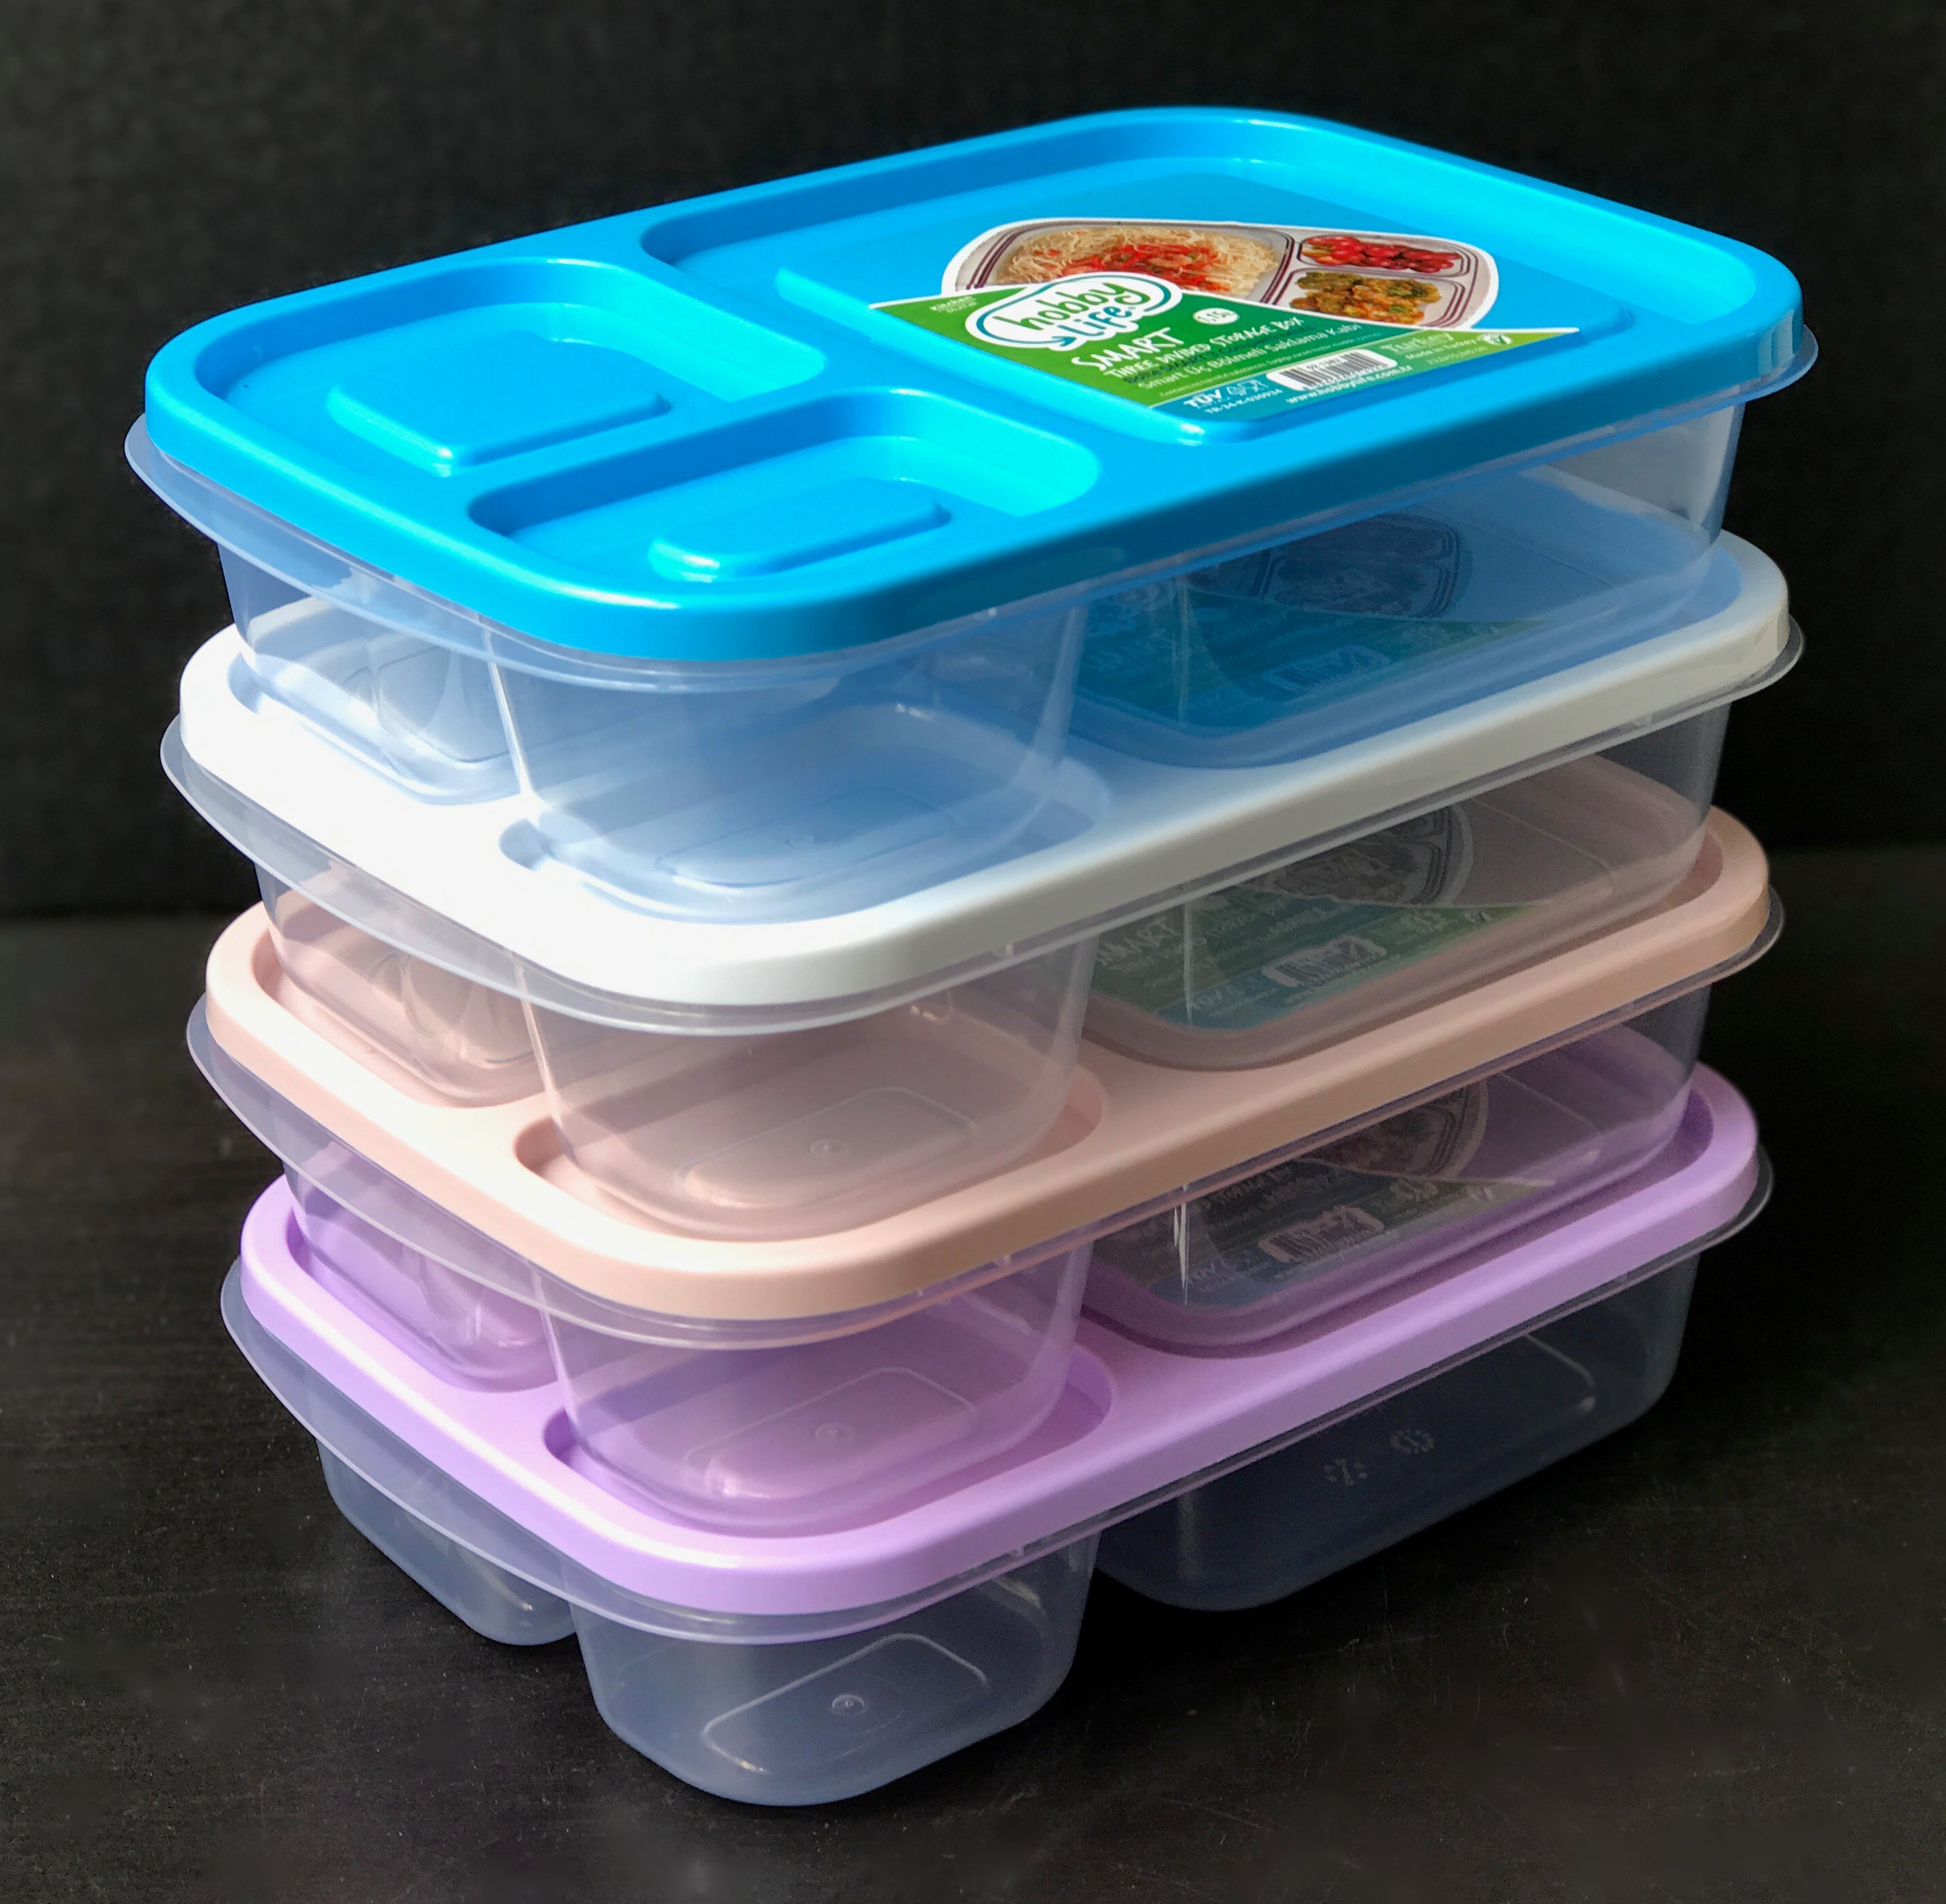 #W02-1383 Smart 3-Divided Food Storage Box 3 pcs Pack (case pack 12 pcs) 